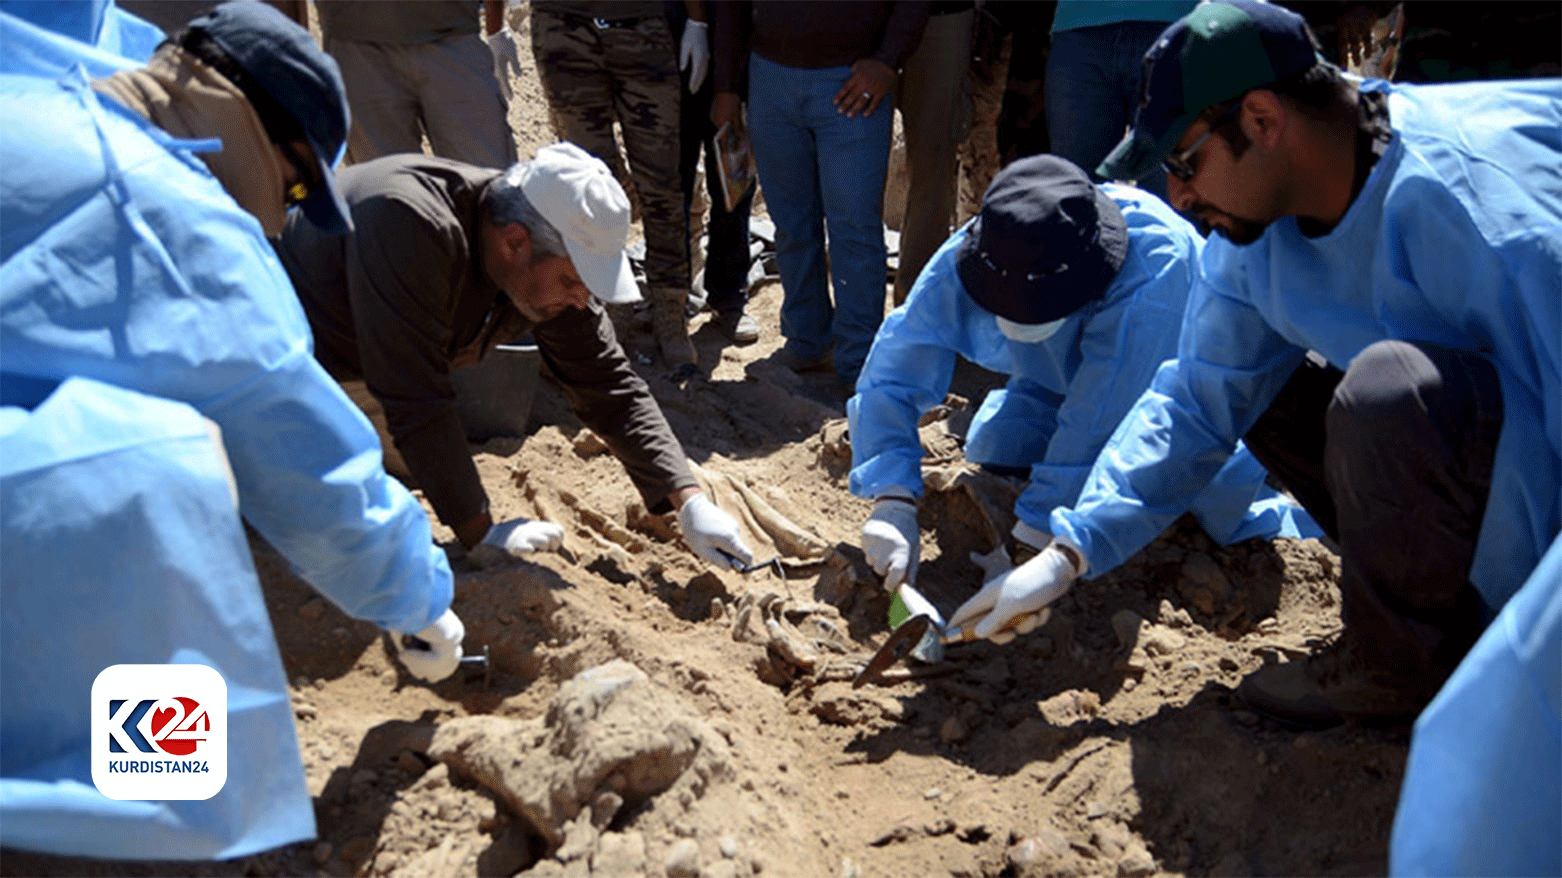 Iraqi forensics teams exhume human bodies from a mass grave site near Camp Speicher. (Photo: Kurdistan 24)